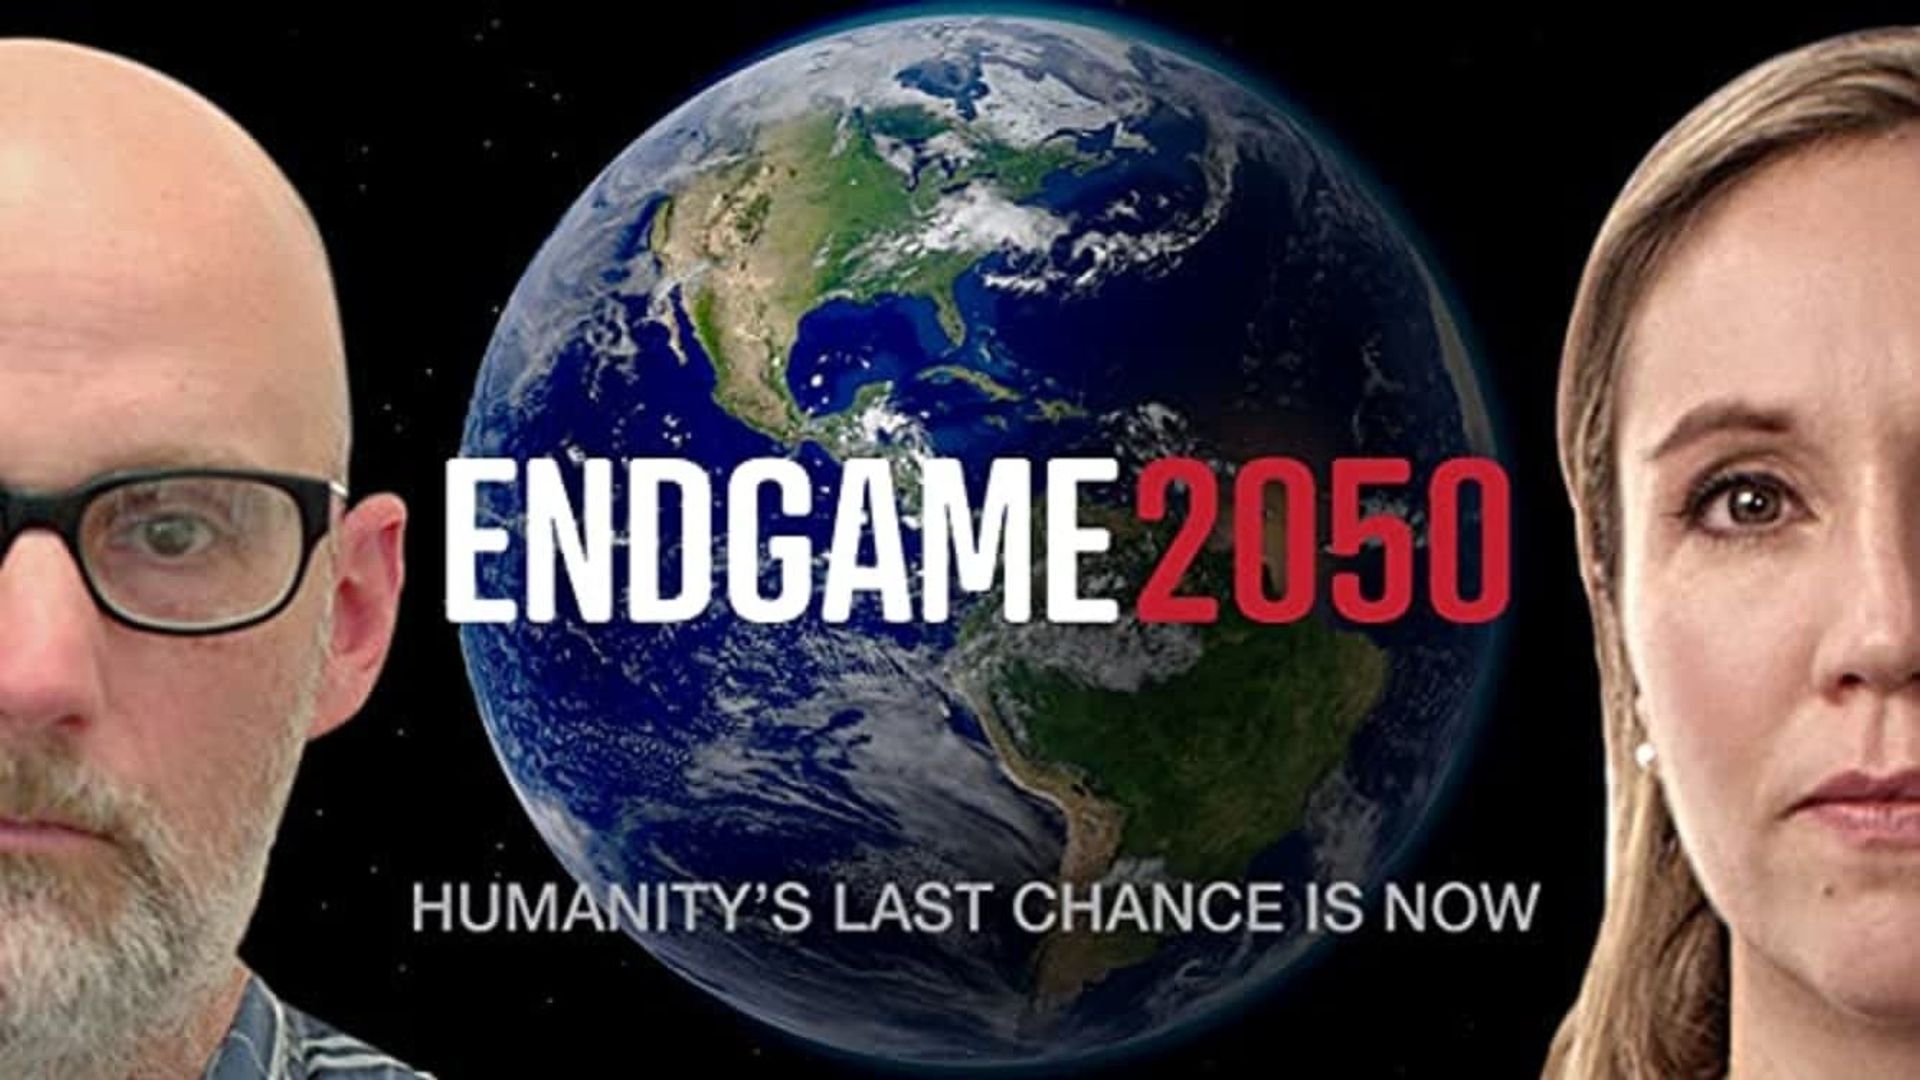 Endgame 2050 background